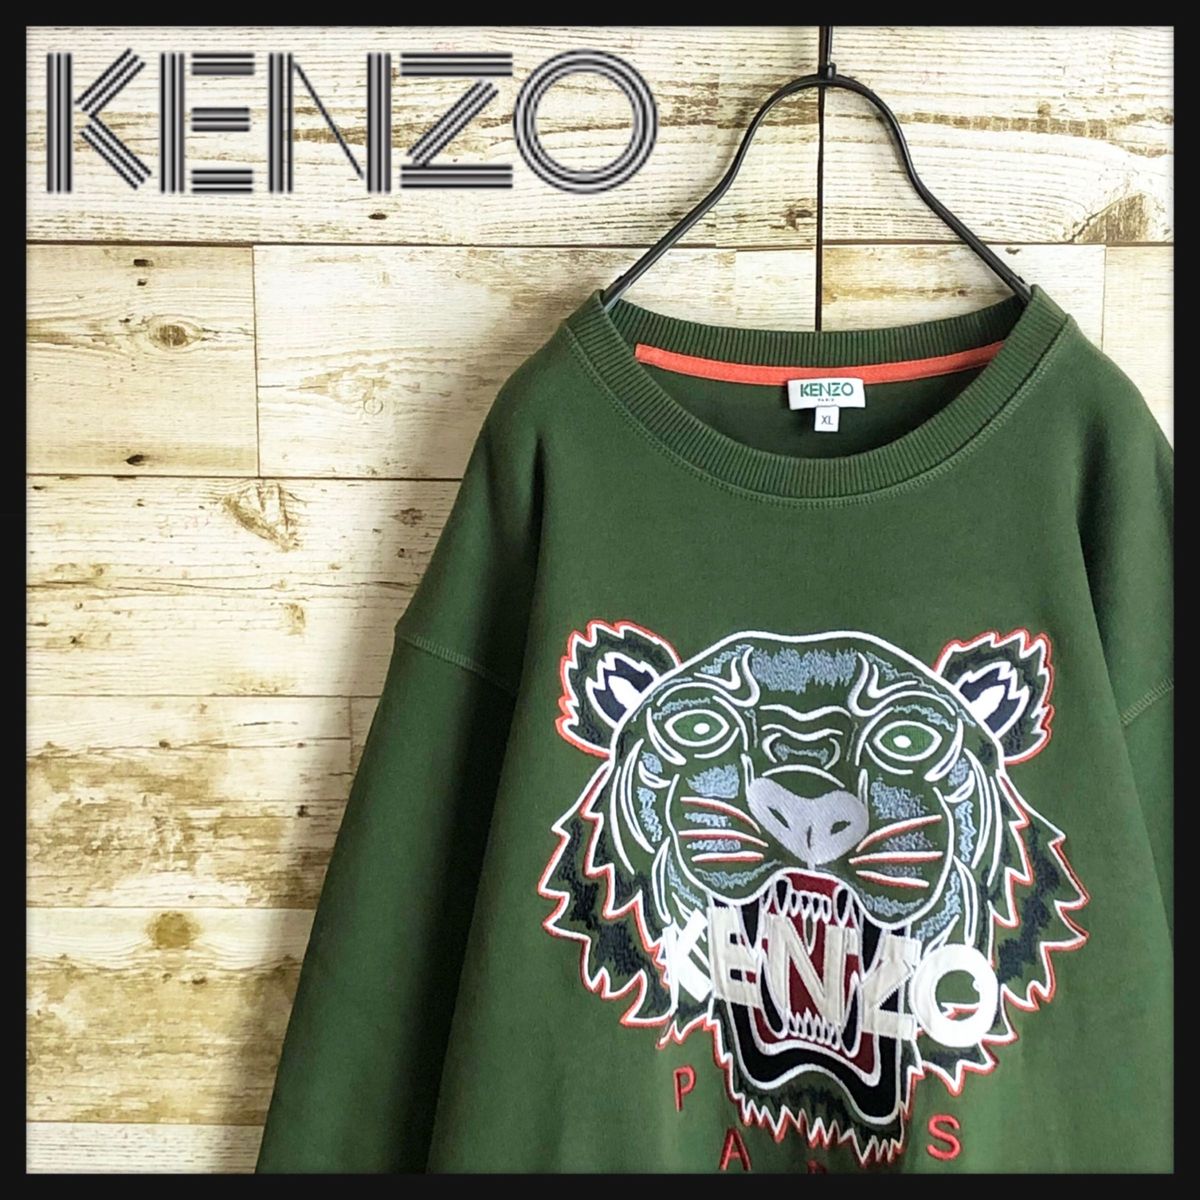 KENZO/タイガー刺繍トートバッグ/ユニセックス - バッグ